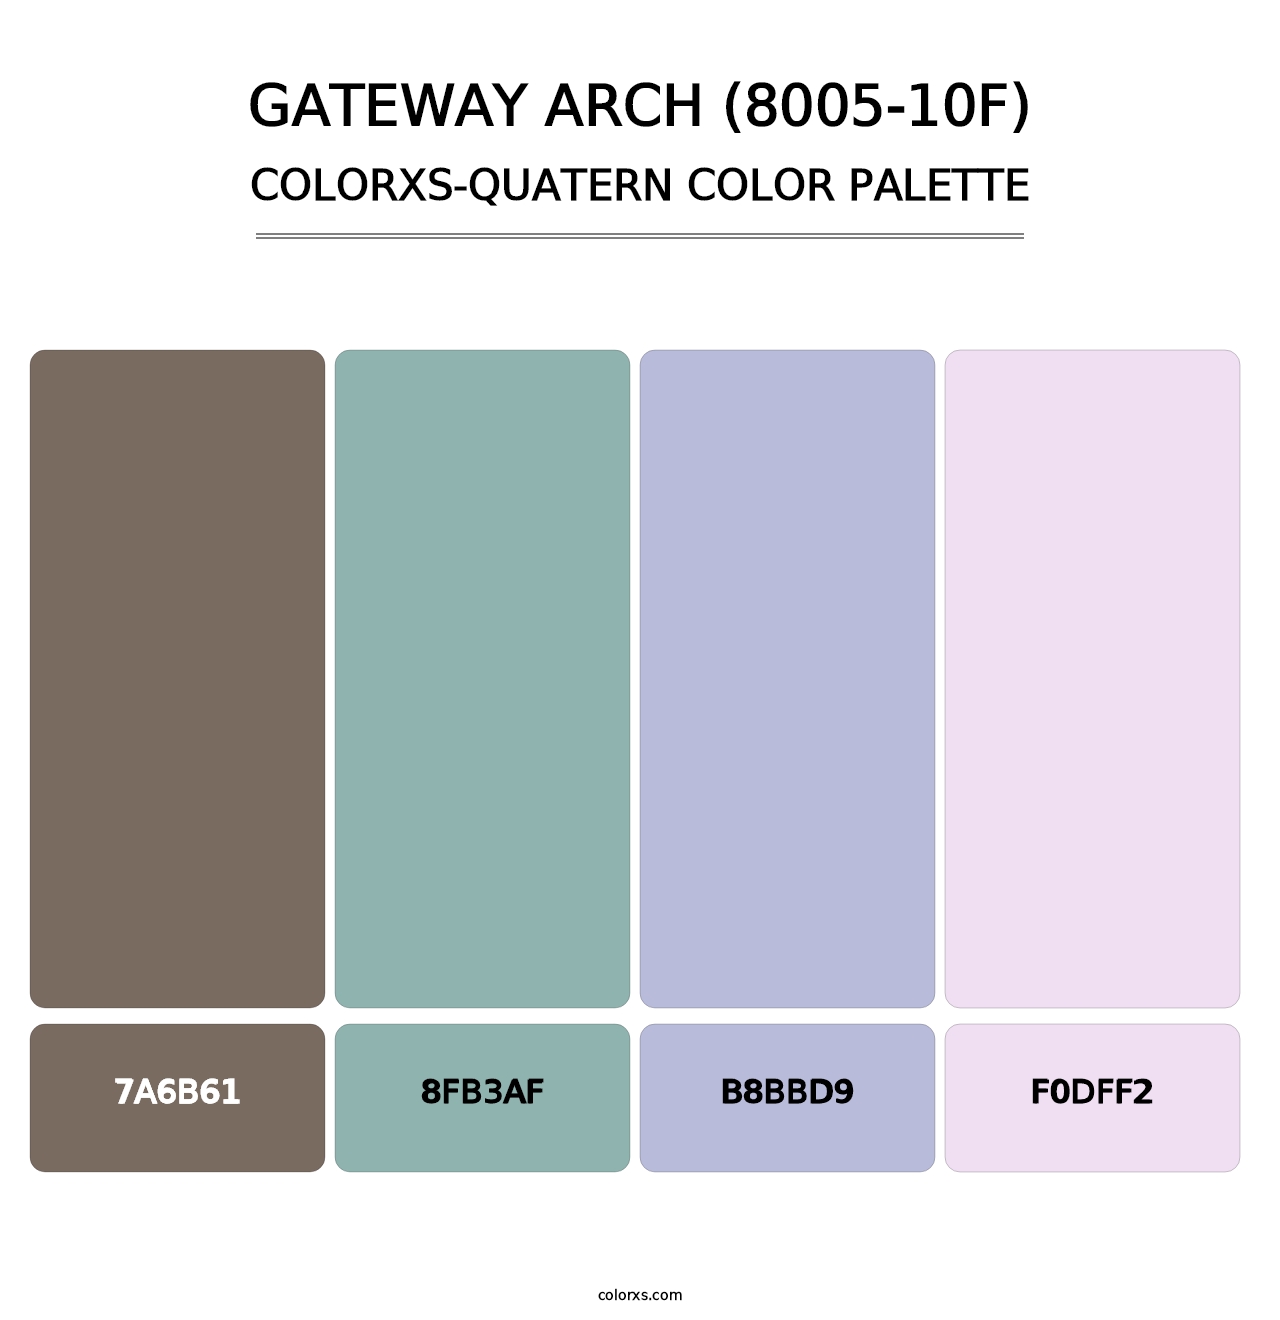 Gateway Arch (8005-10F) - Colorxs Quatern Palette